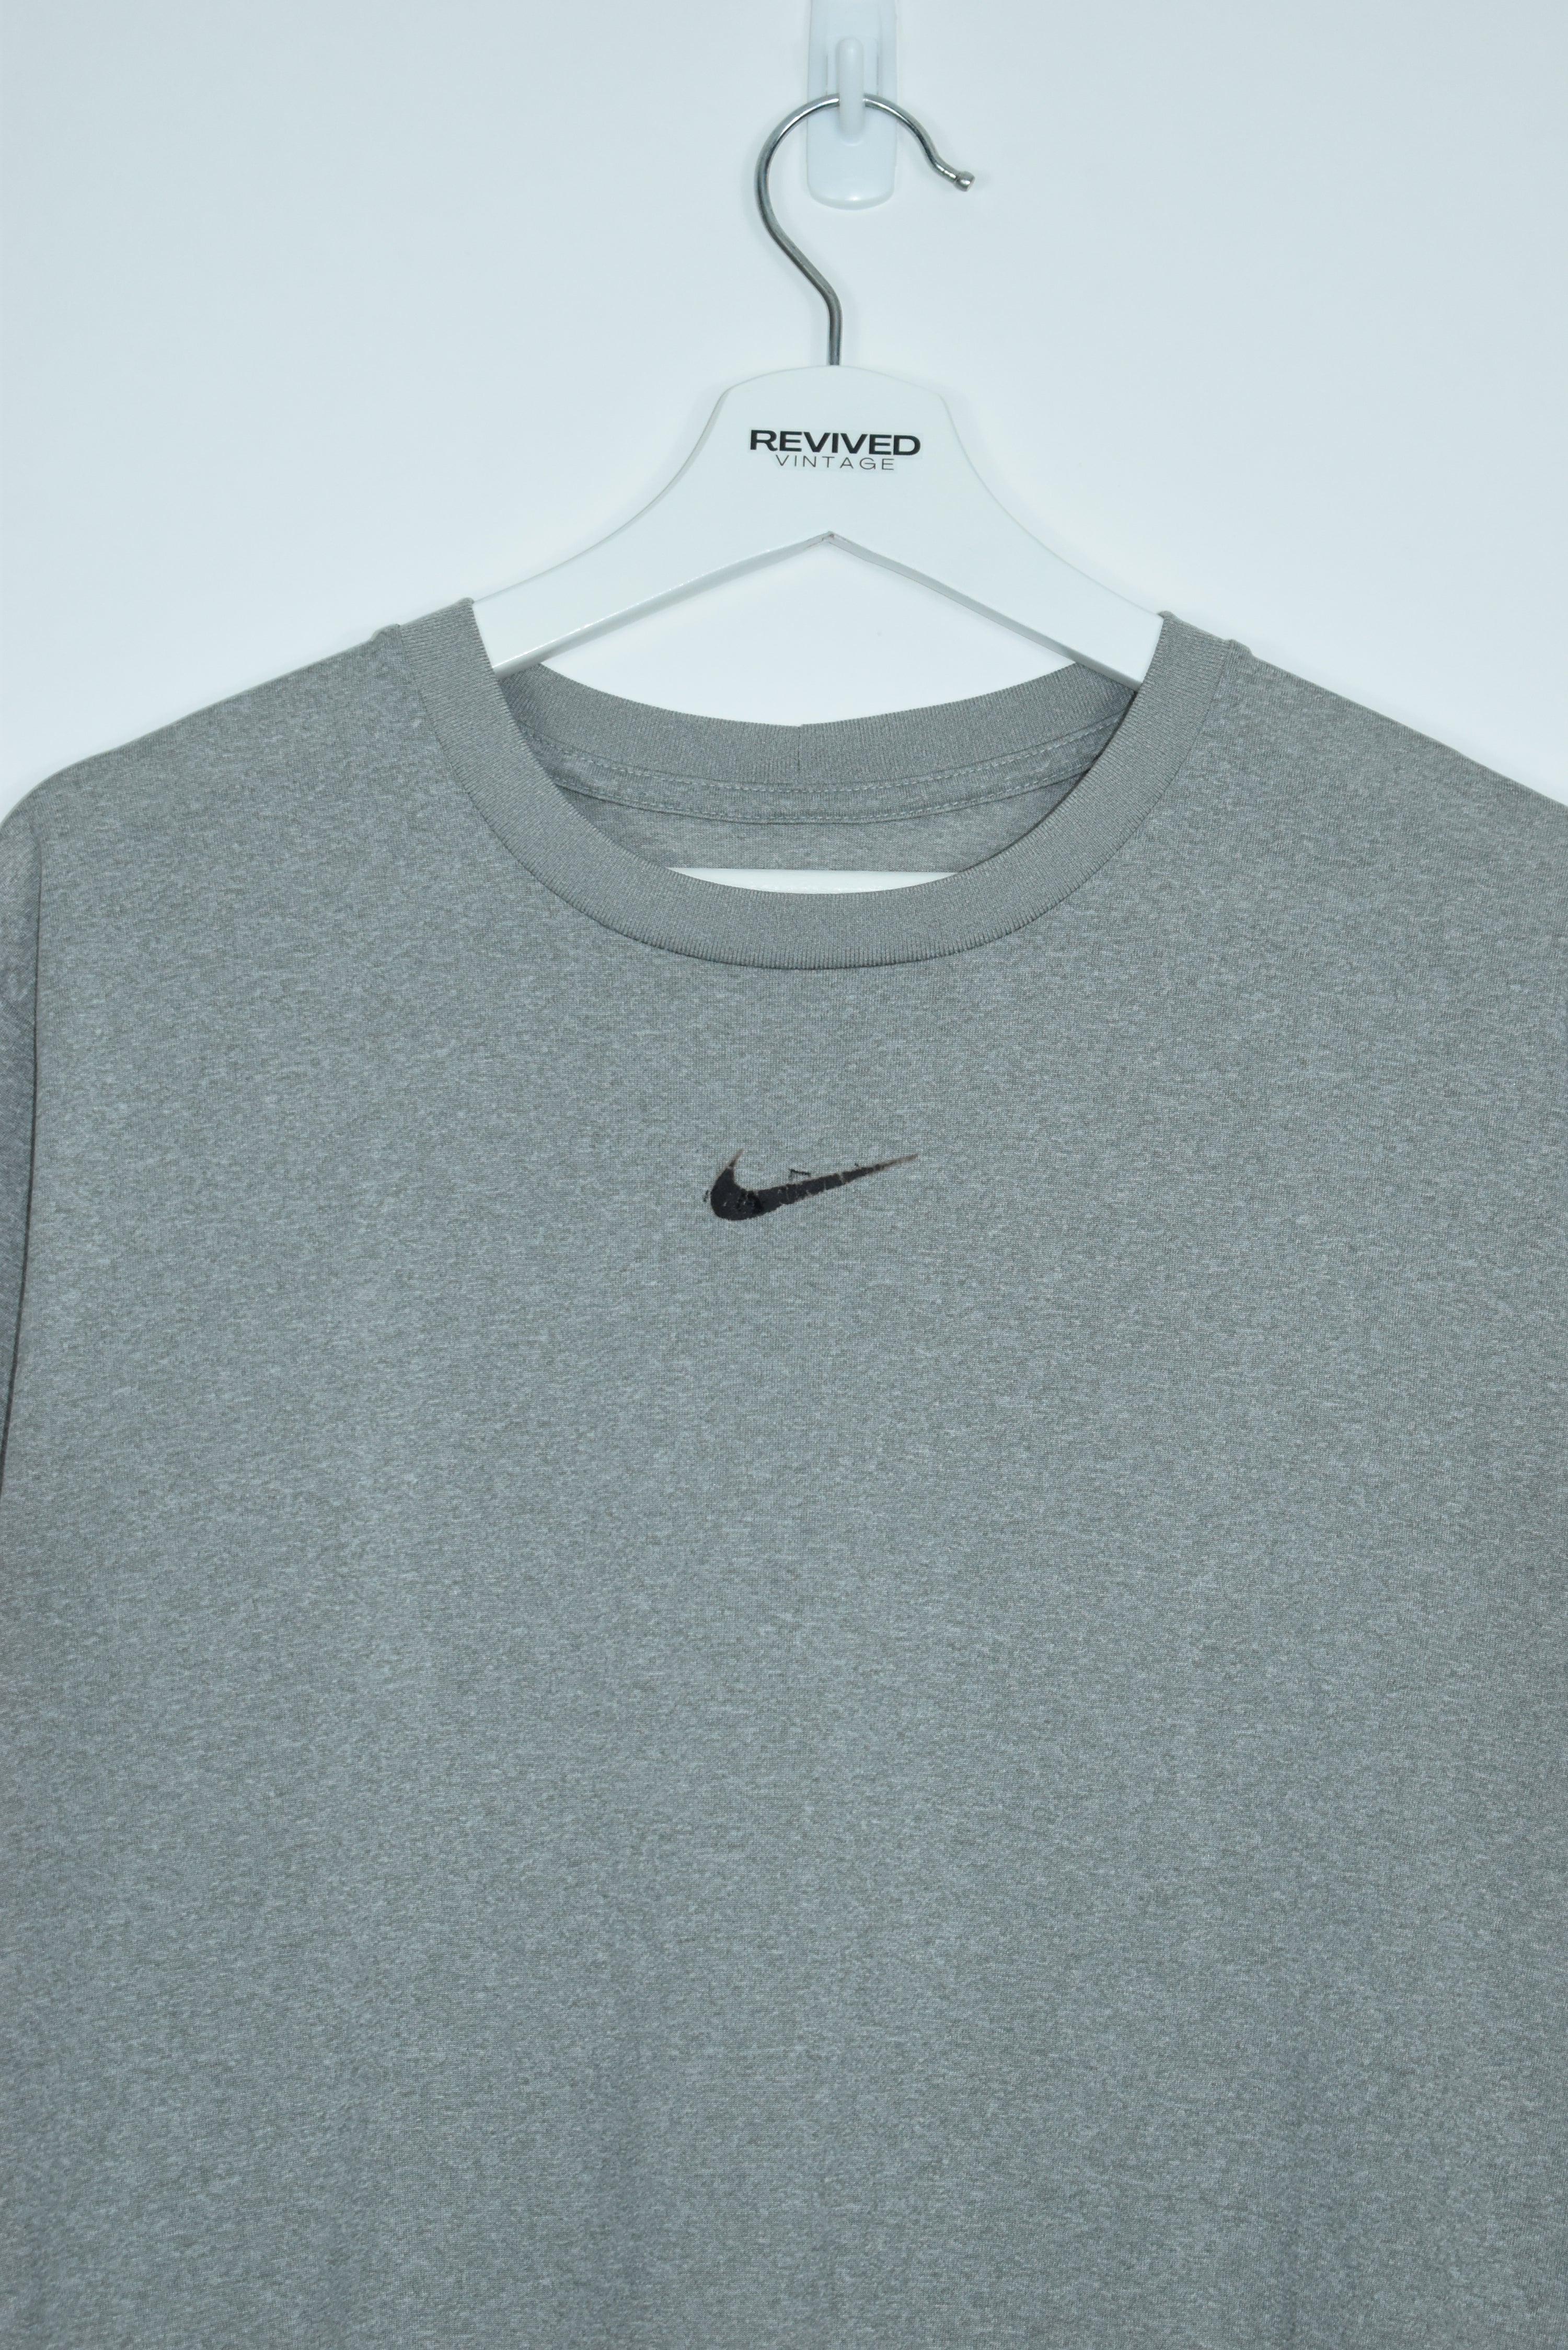 Vintage Nike Centre Swoosh Athletic T Shirt Medium